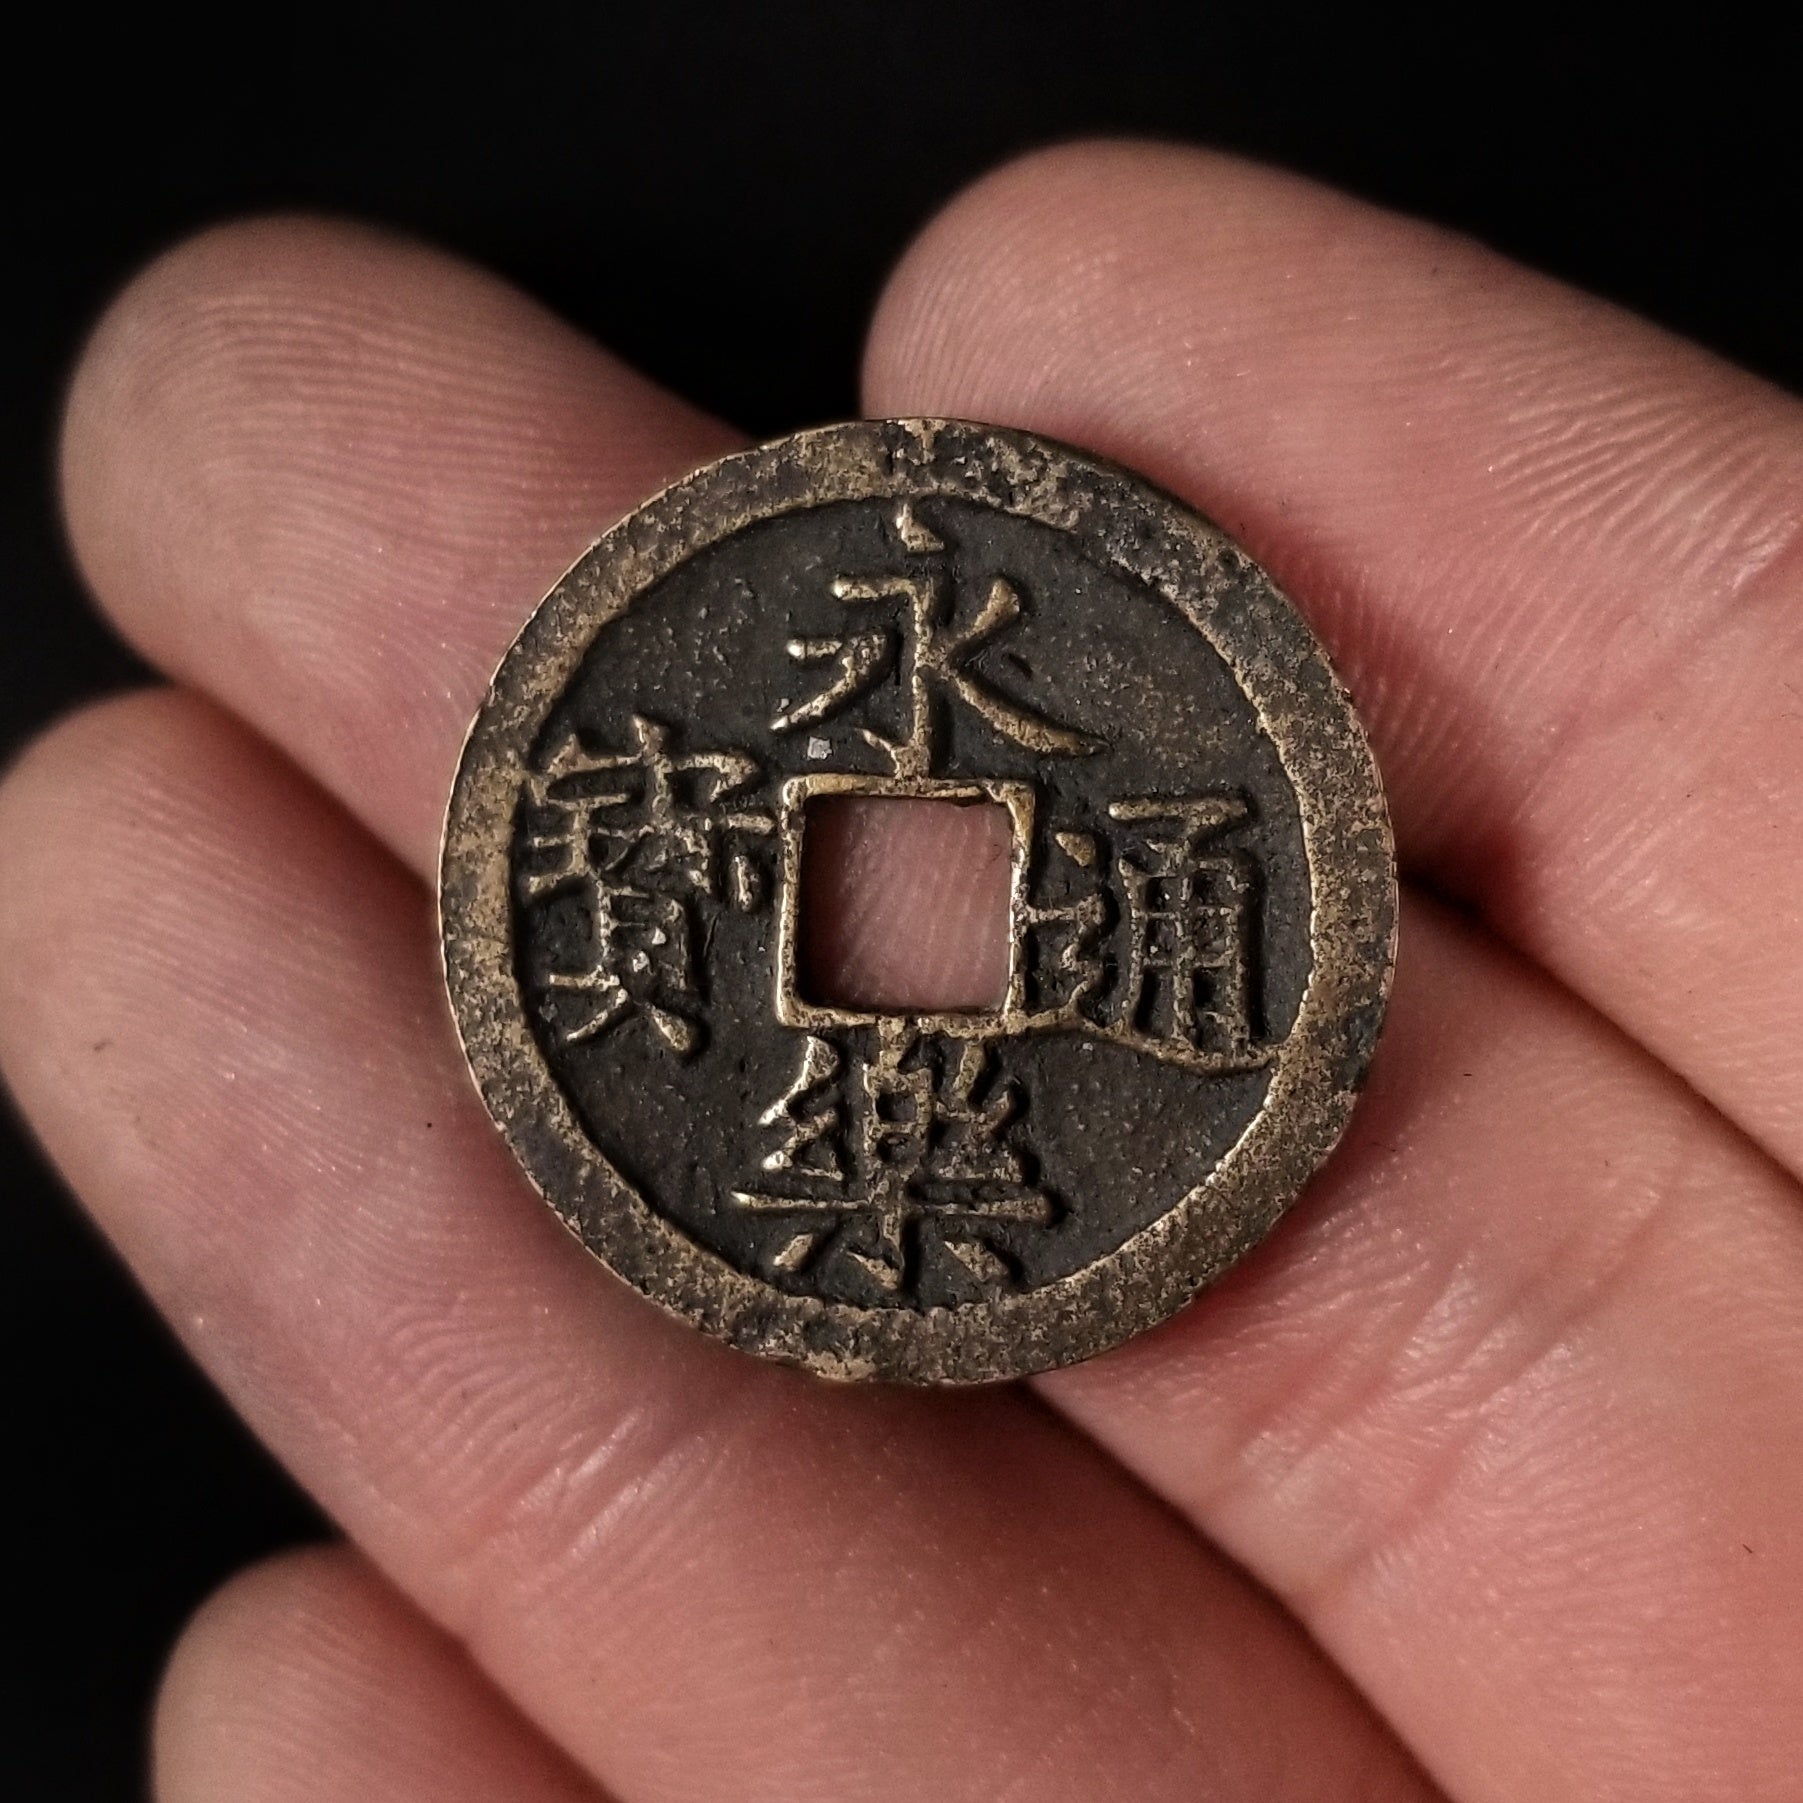 China, Ming Dynasty - 1402 AD - Early Modern China